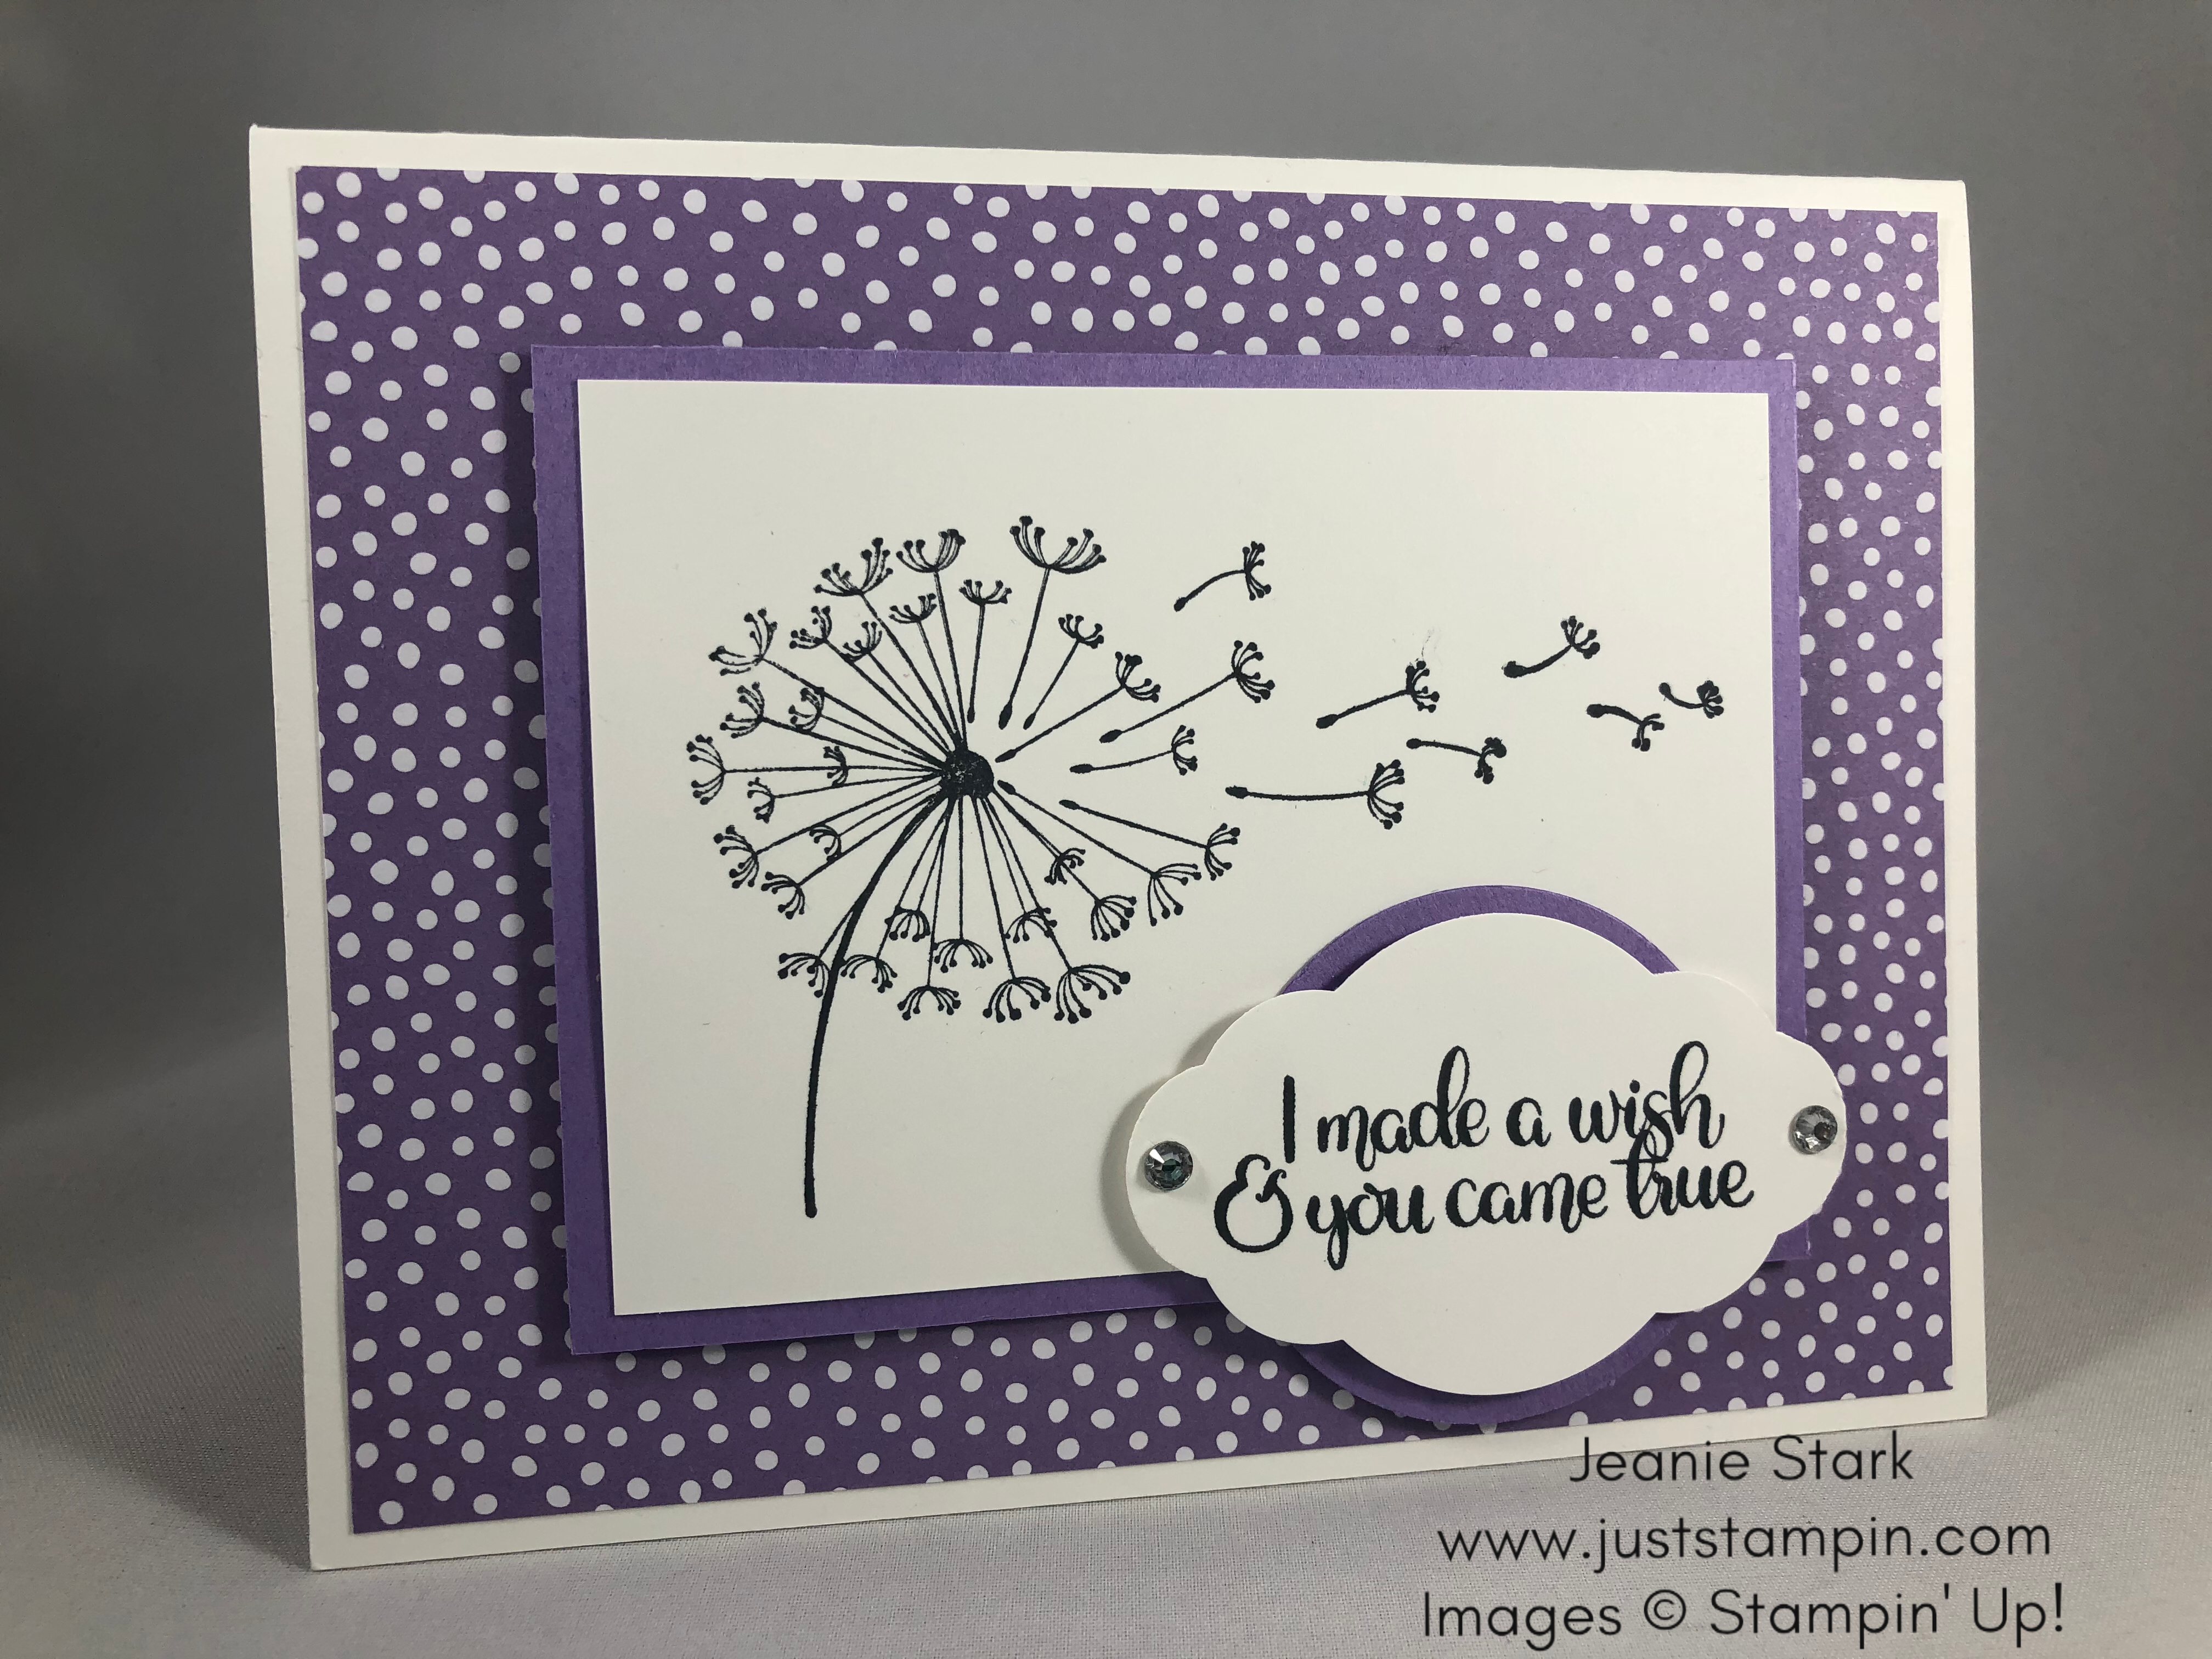 Stampin Up Dandelion Wishes birthday card idea - Jeanie Stark StampinUp